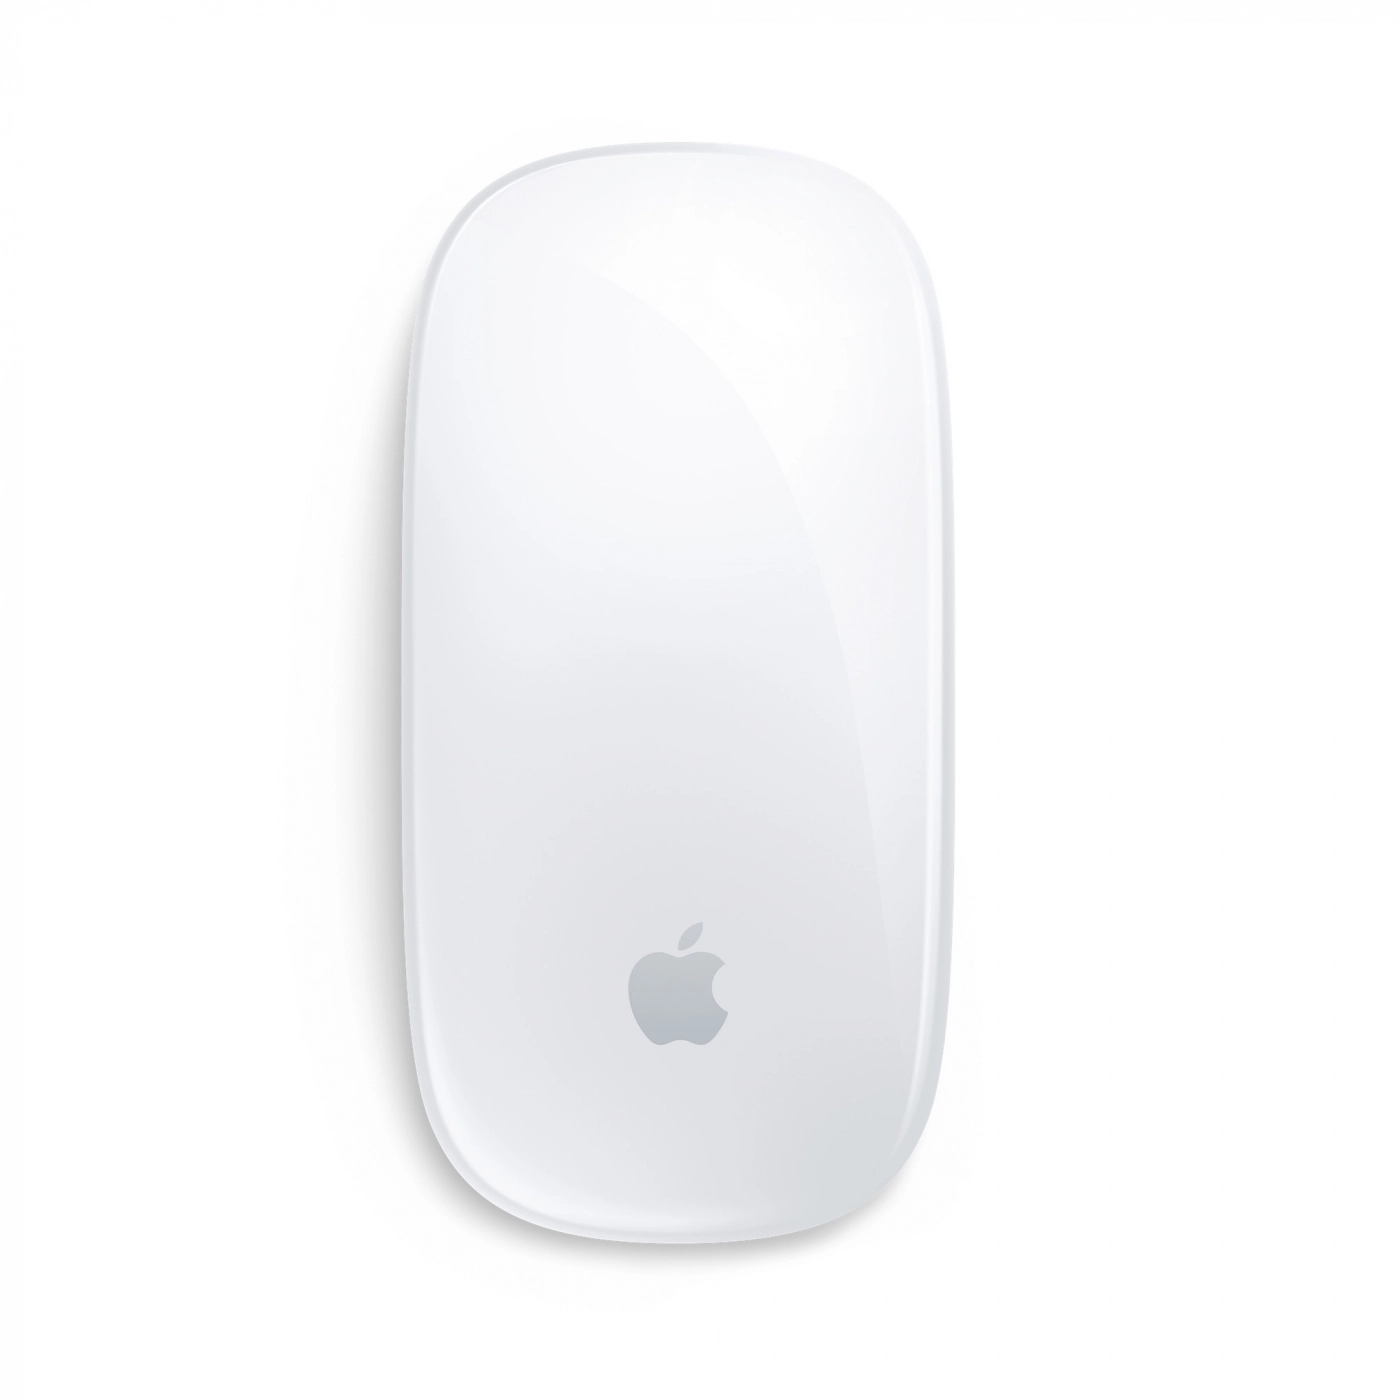 Купить Мышь Apple Magic Mouse Bluetooth White - фото 3